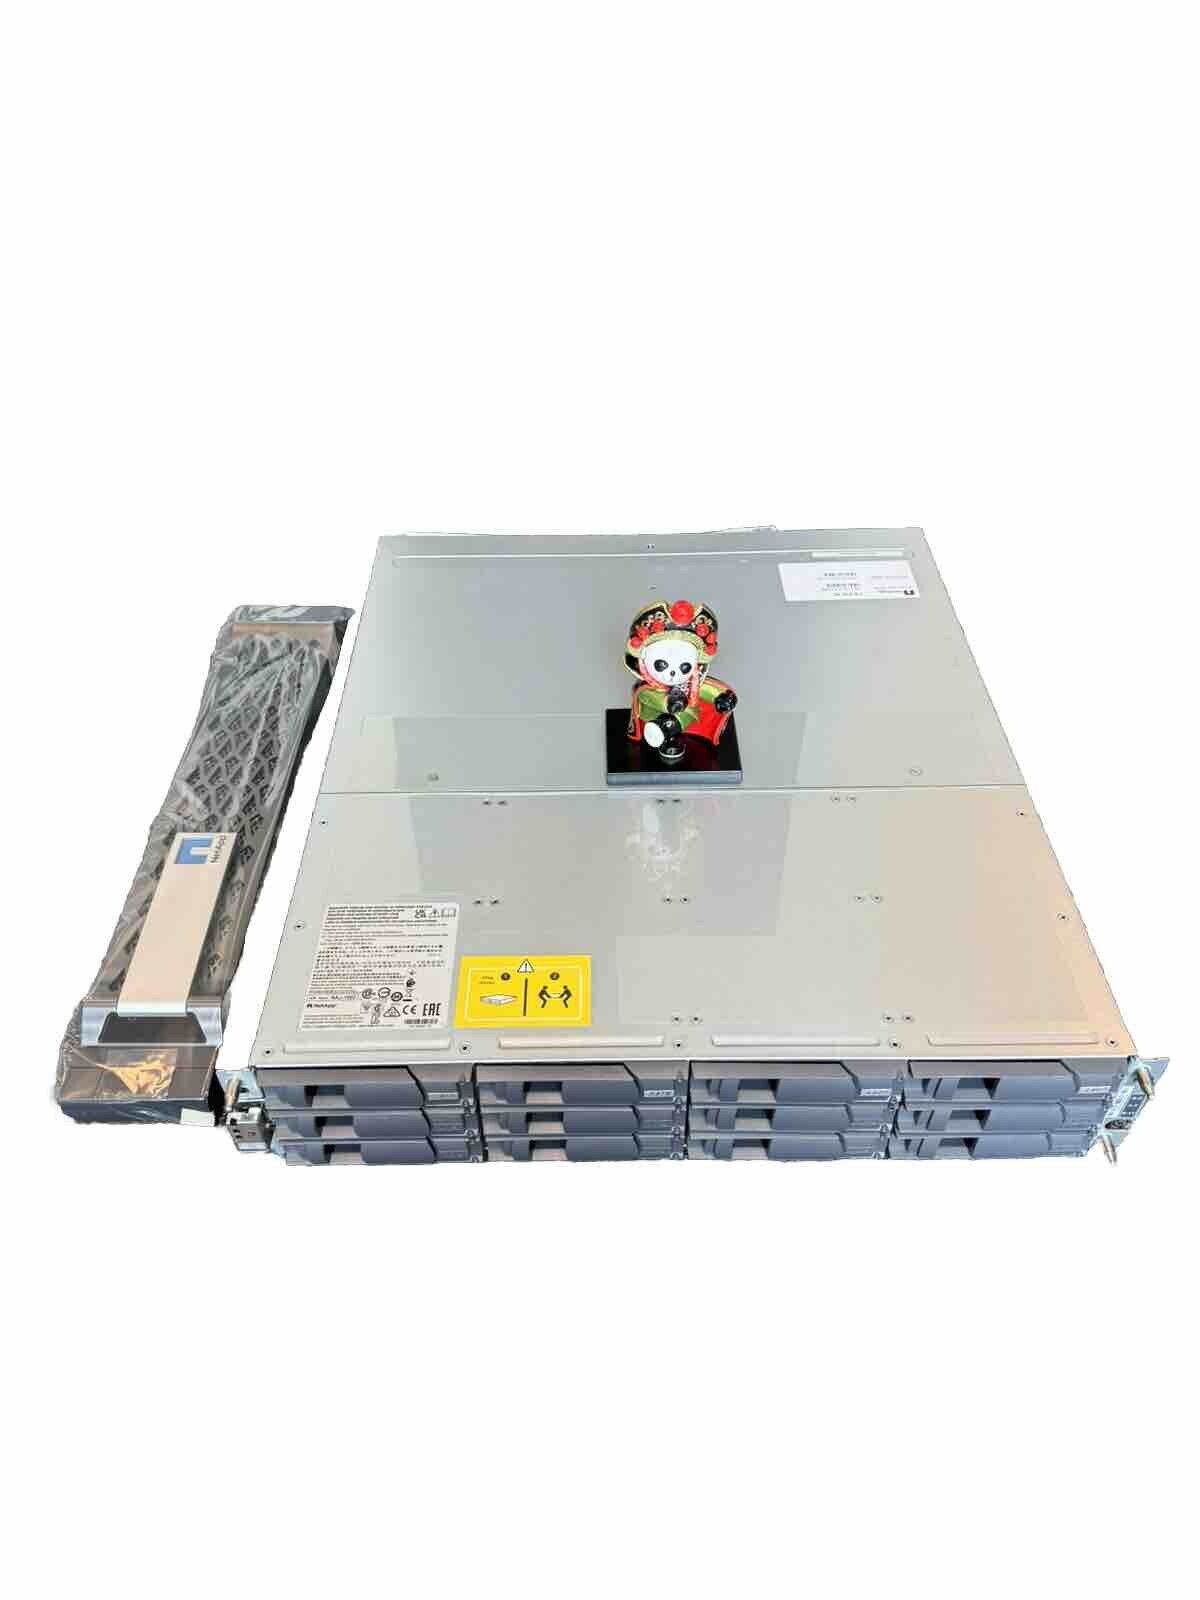 Netapp FAS2720 Dual Controllers with 4x3.8Tb X364A ,8x16TB X388A .Original Box